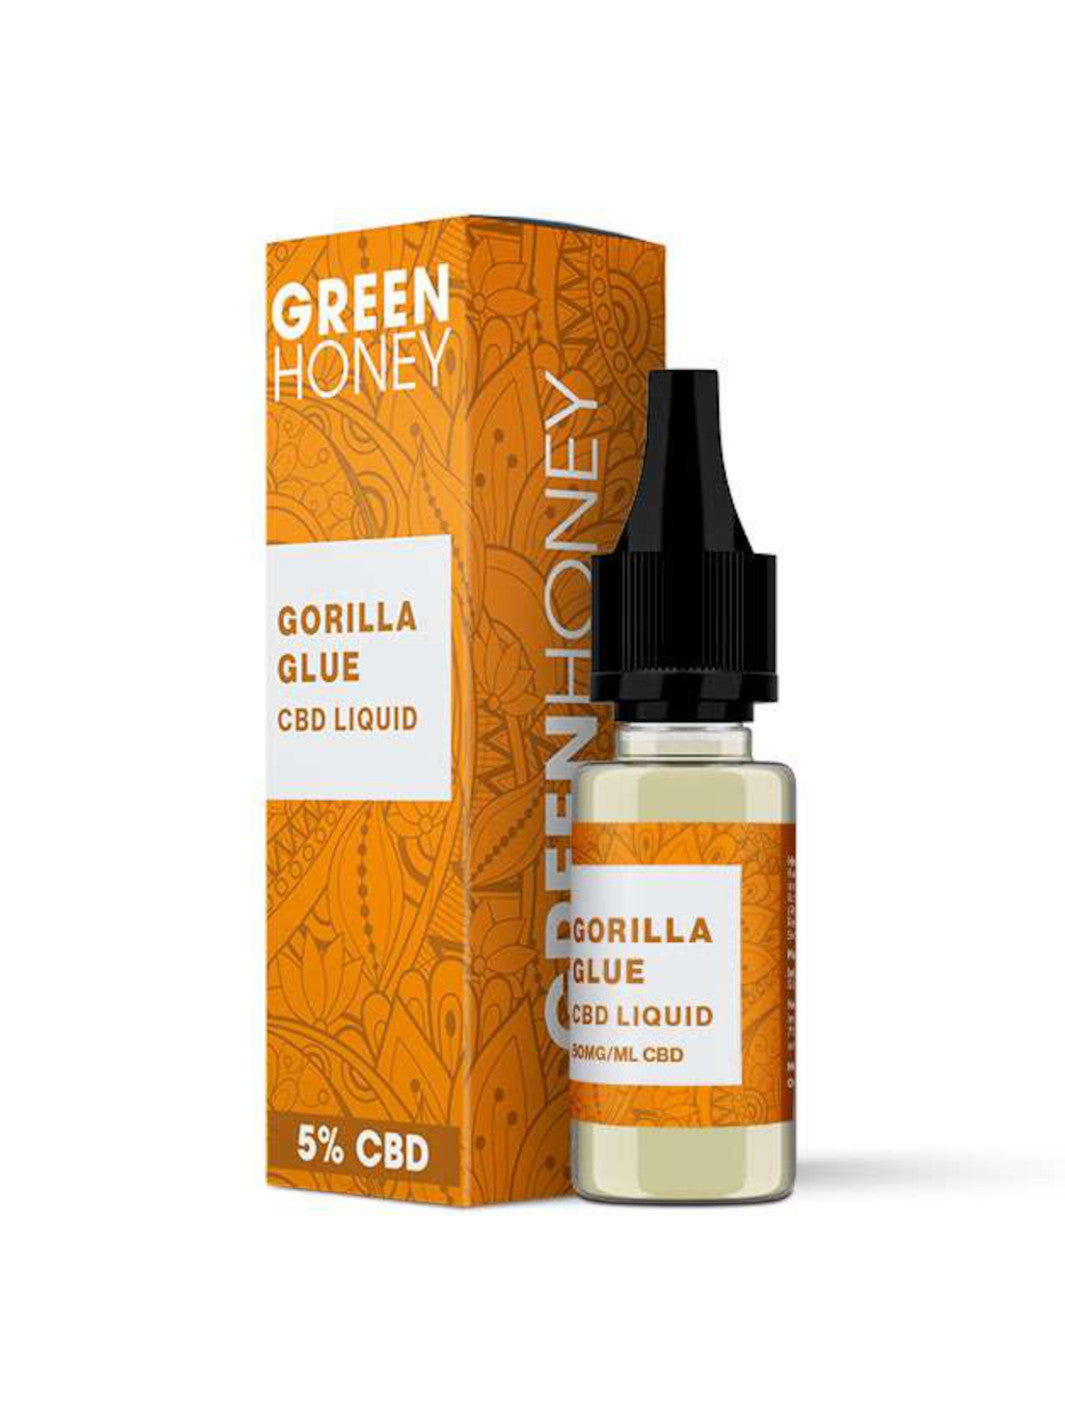 Green Honey CBD Liquid Gorilla Glue